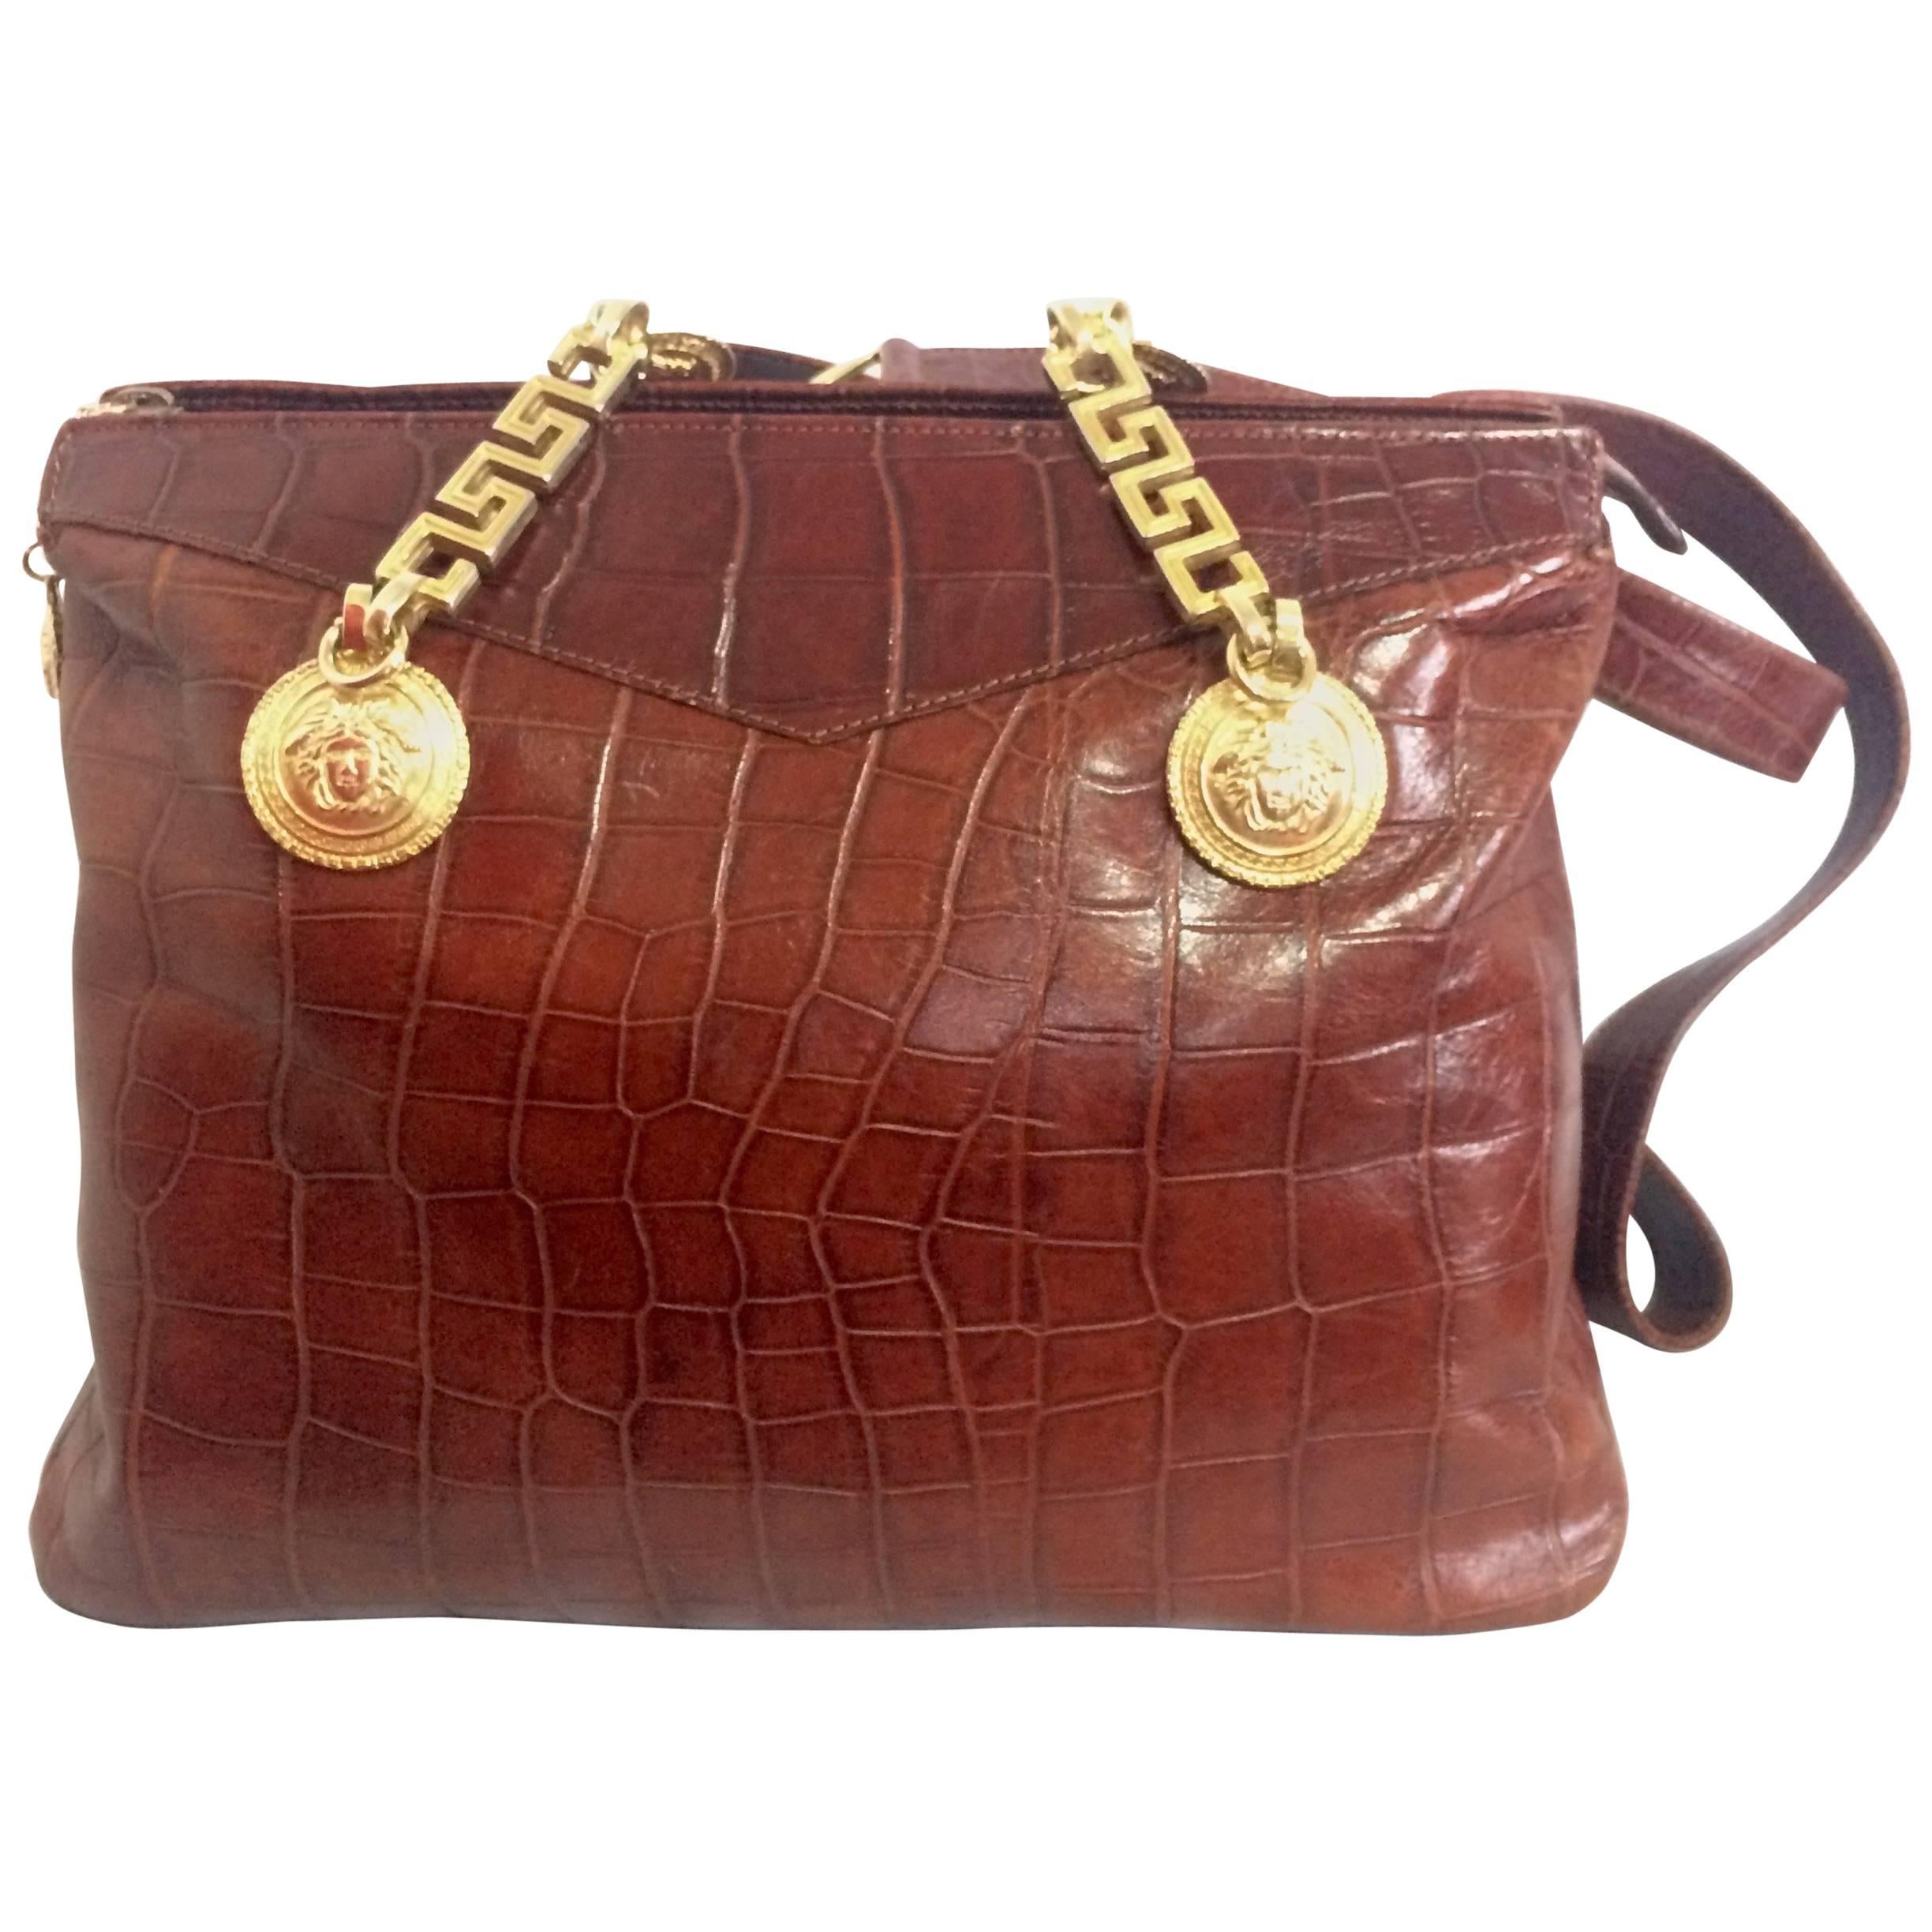 Vintage Gianni Versace brown croc-embossed leather shoulder tote bag.